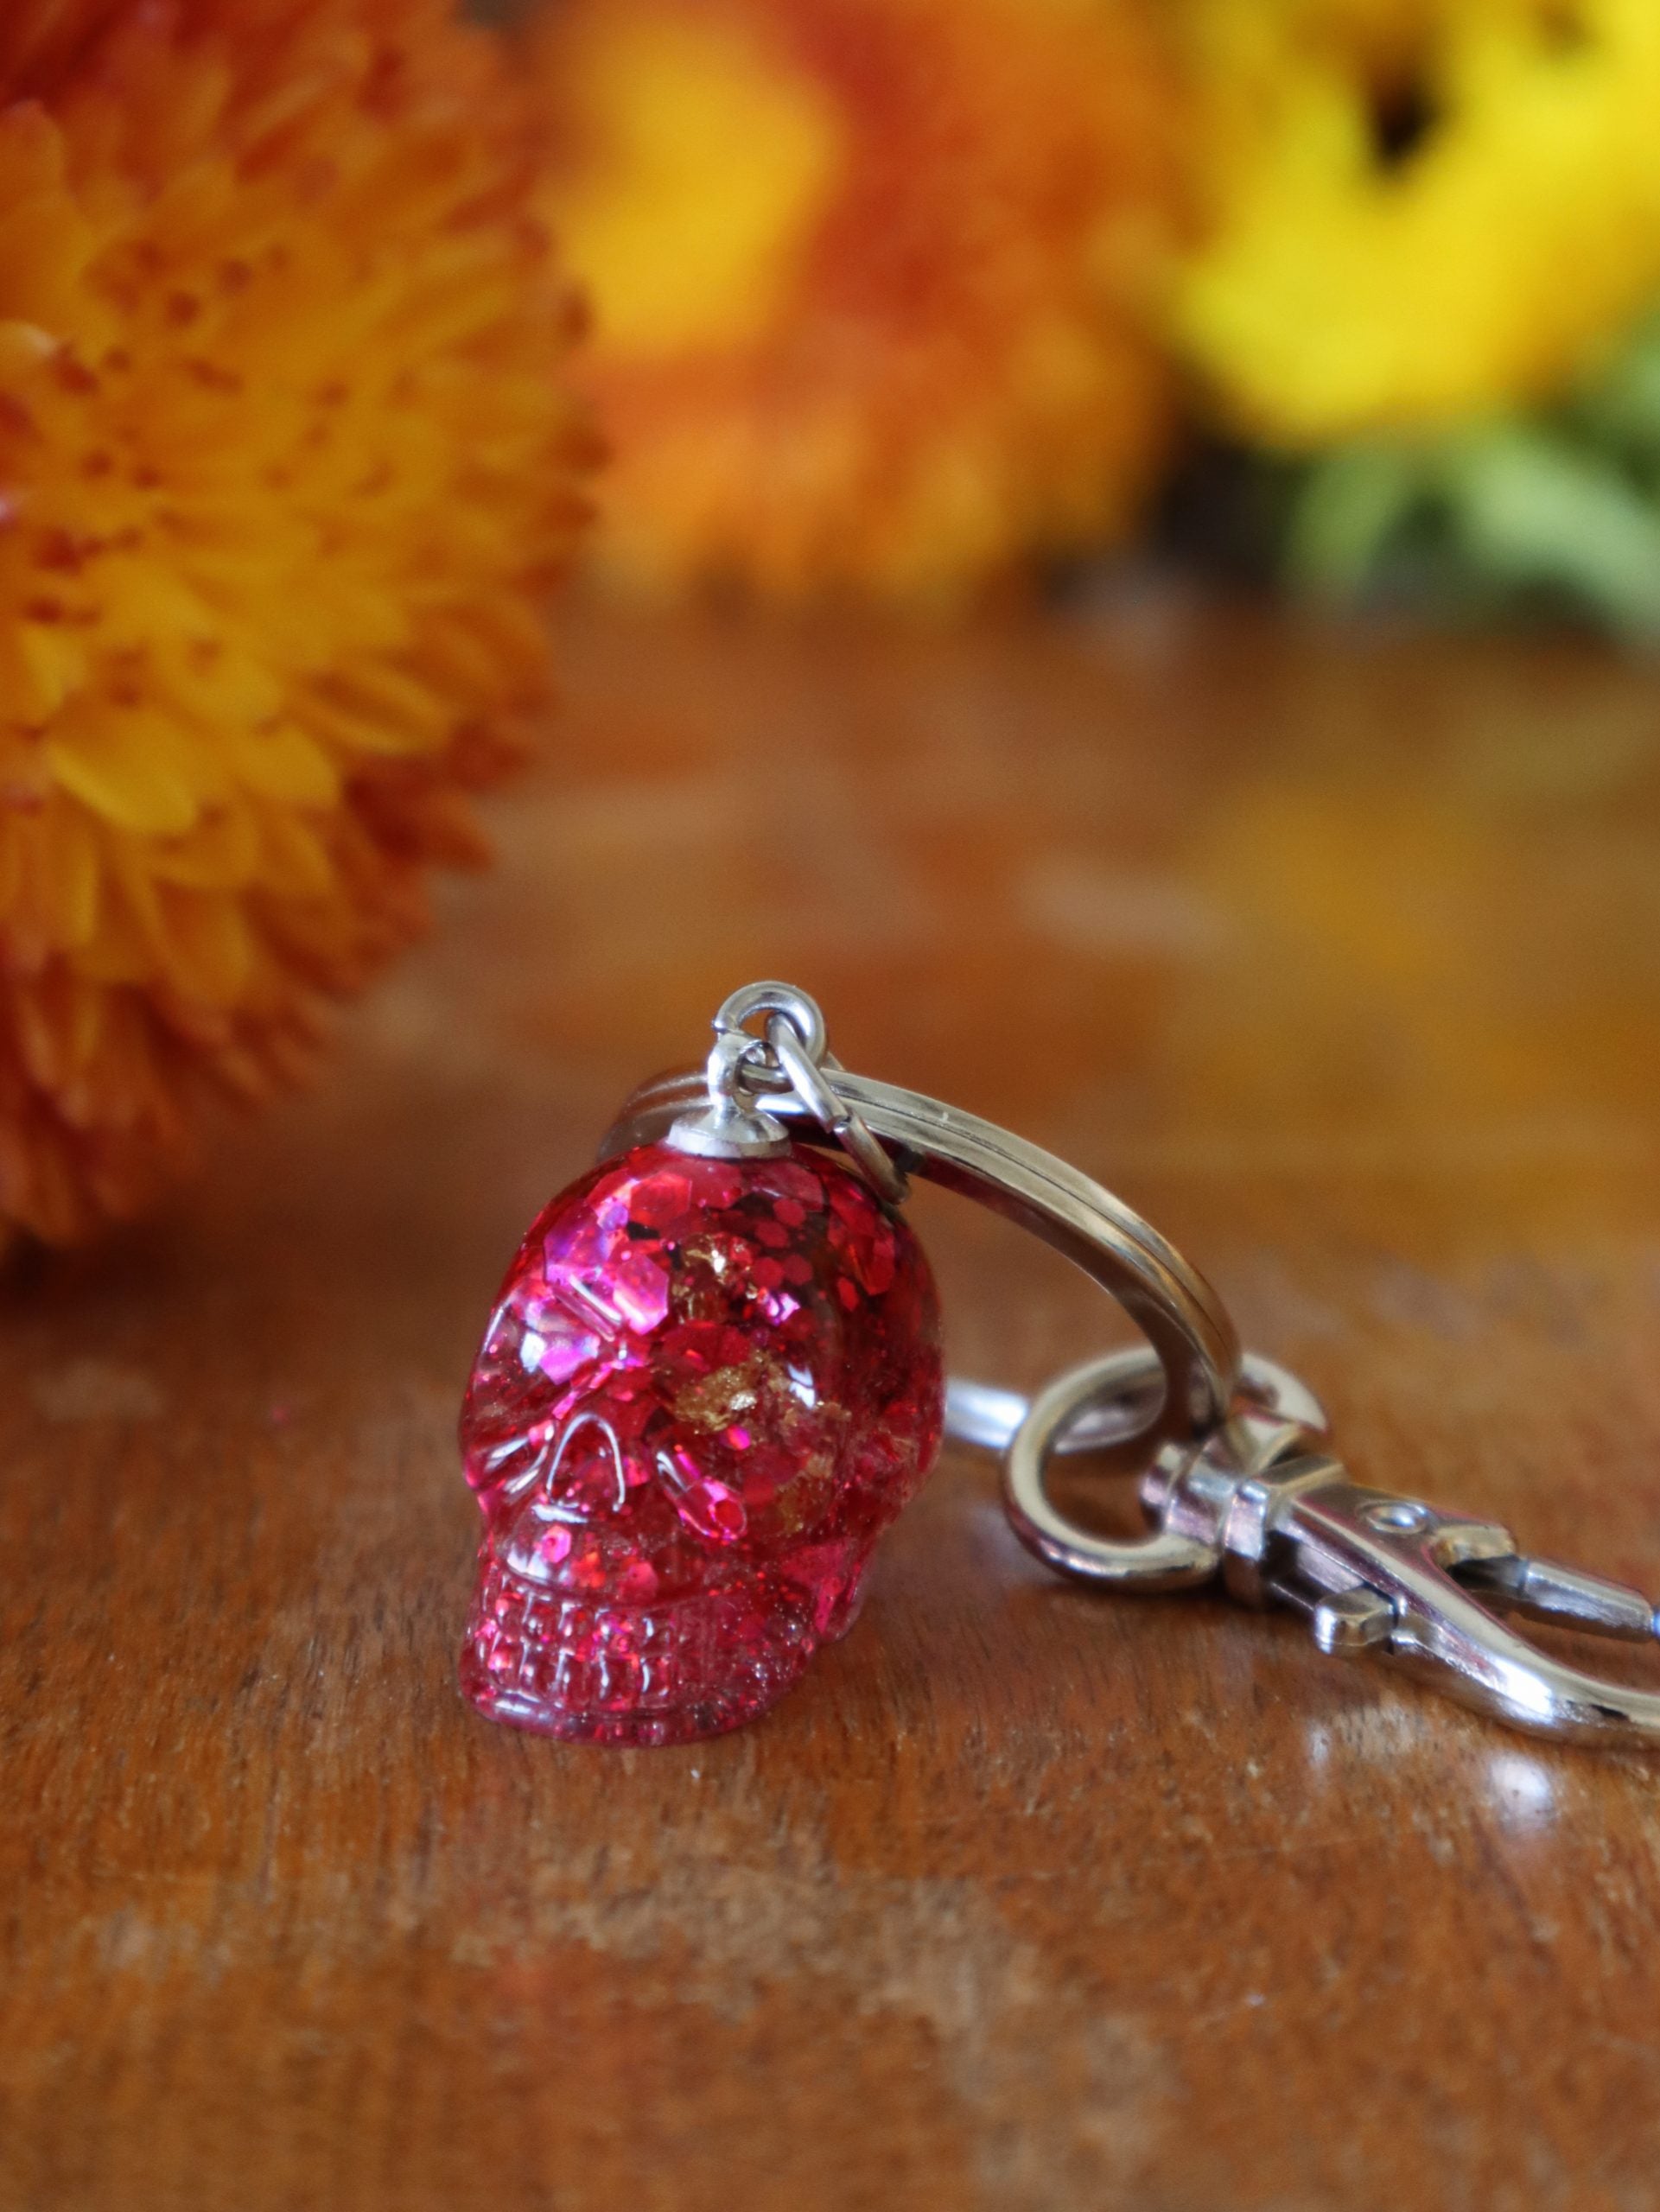 Pink Skull Necklace